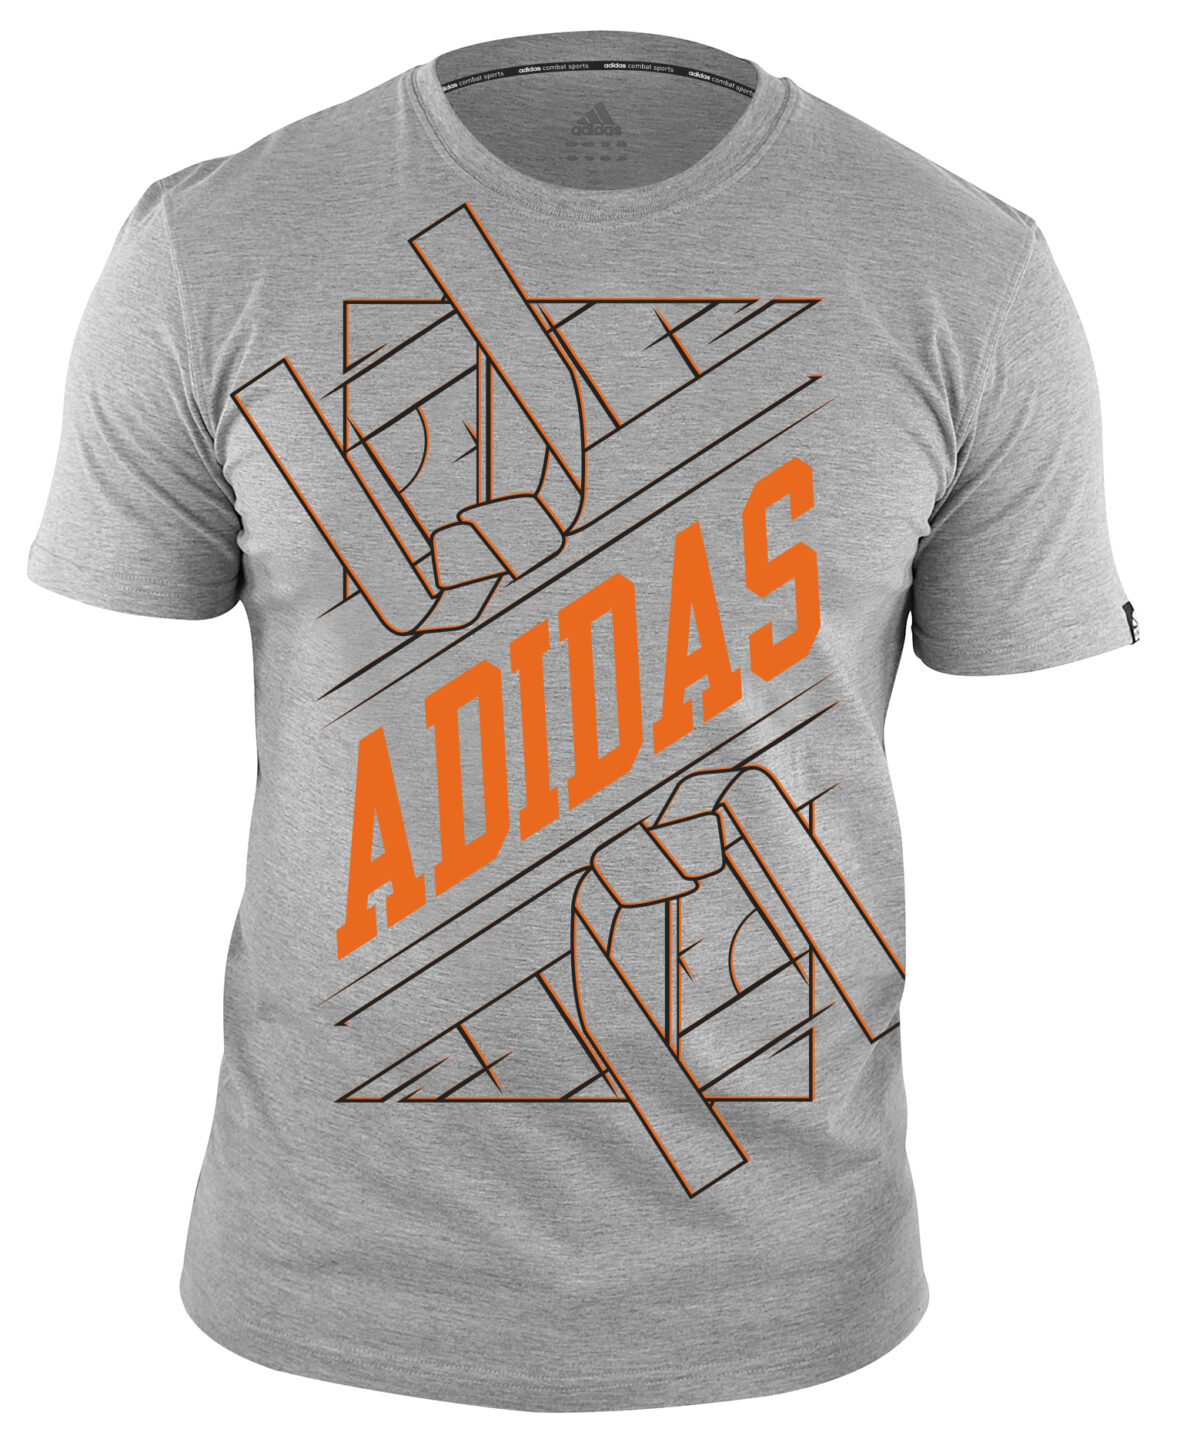 Adidas martial arts T-shirt | unisex model | grijs-oranje